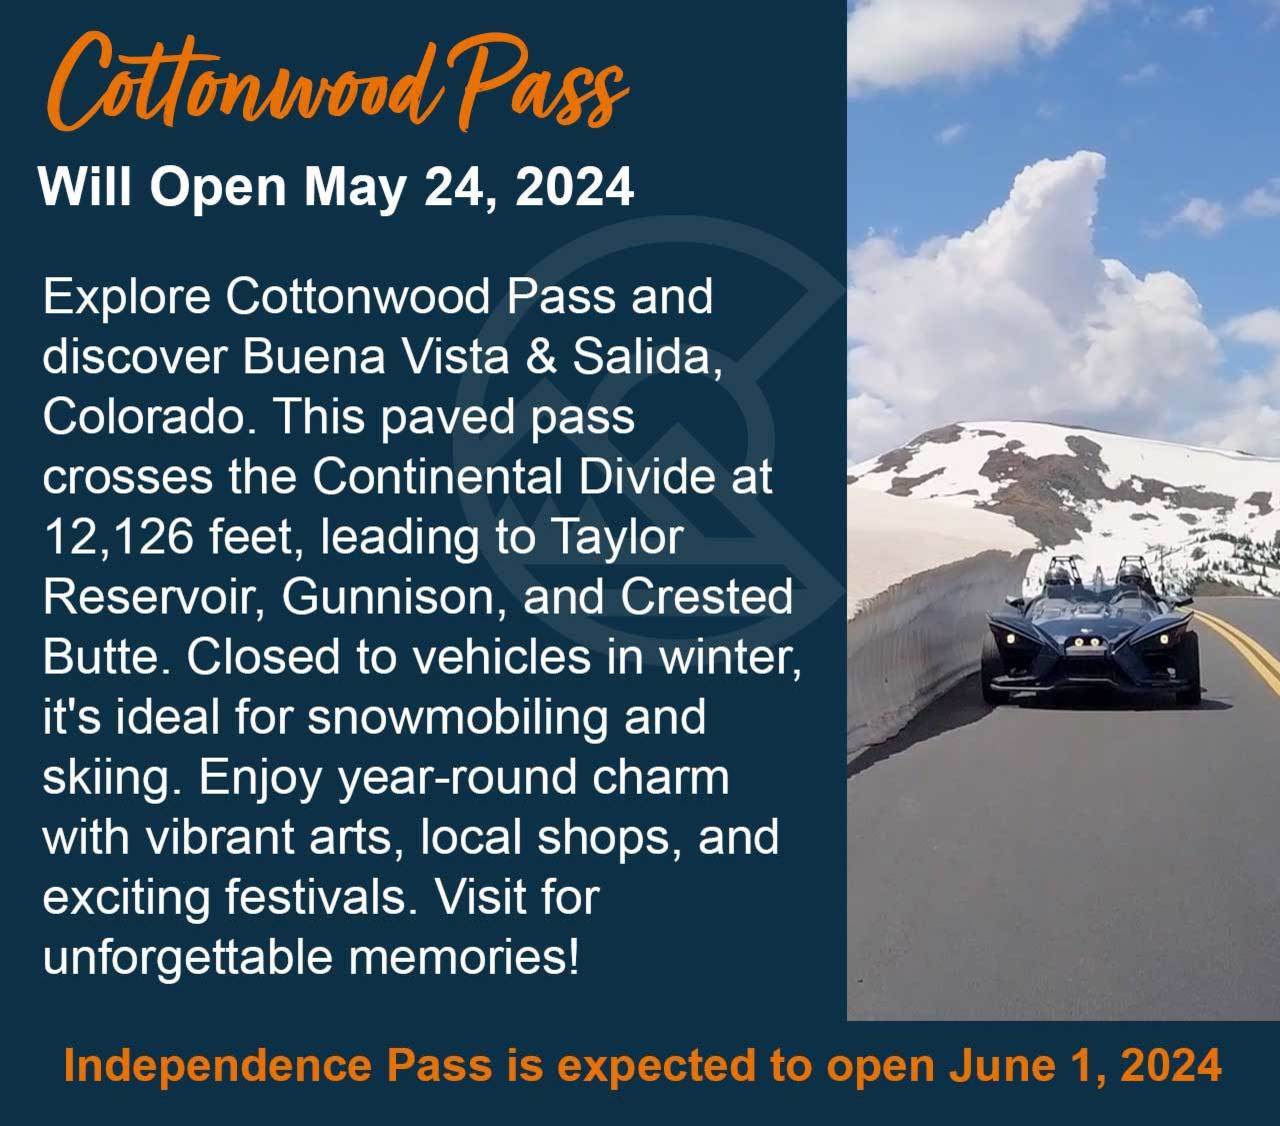 Cottonwood Pass will open May 24, 2024